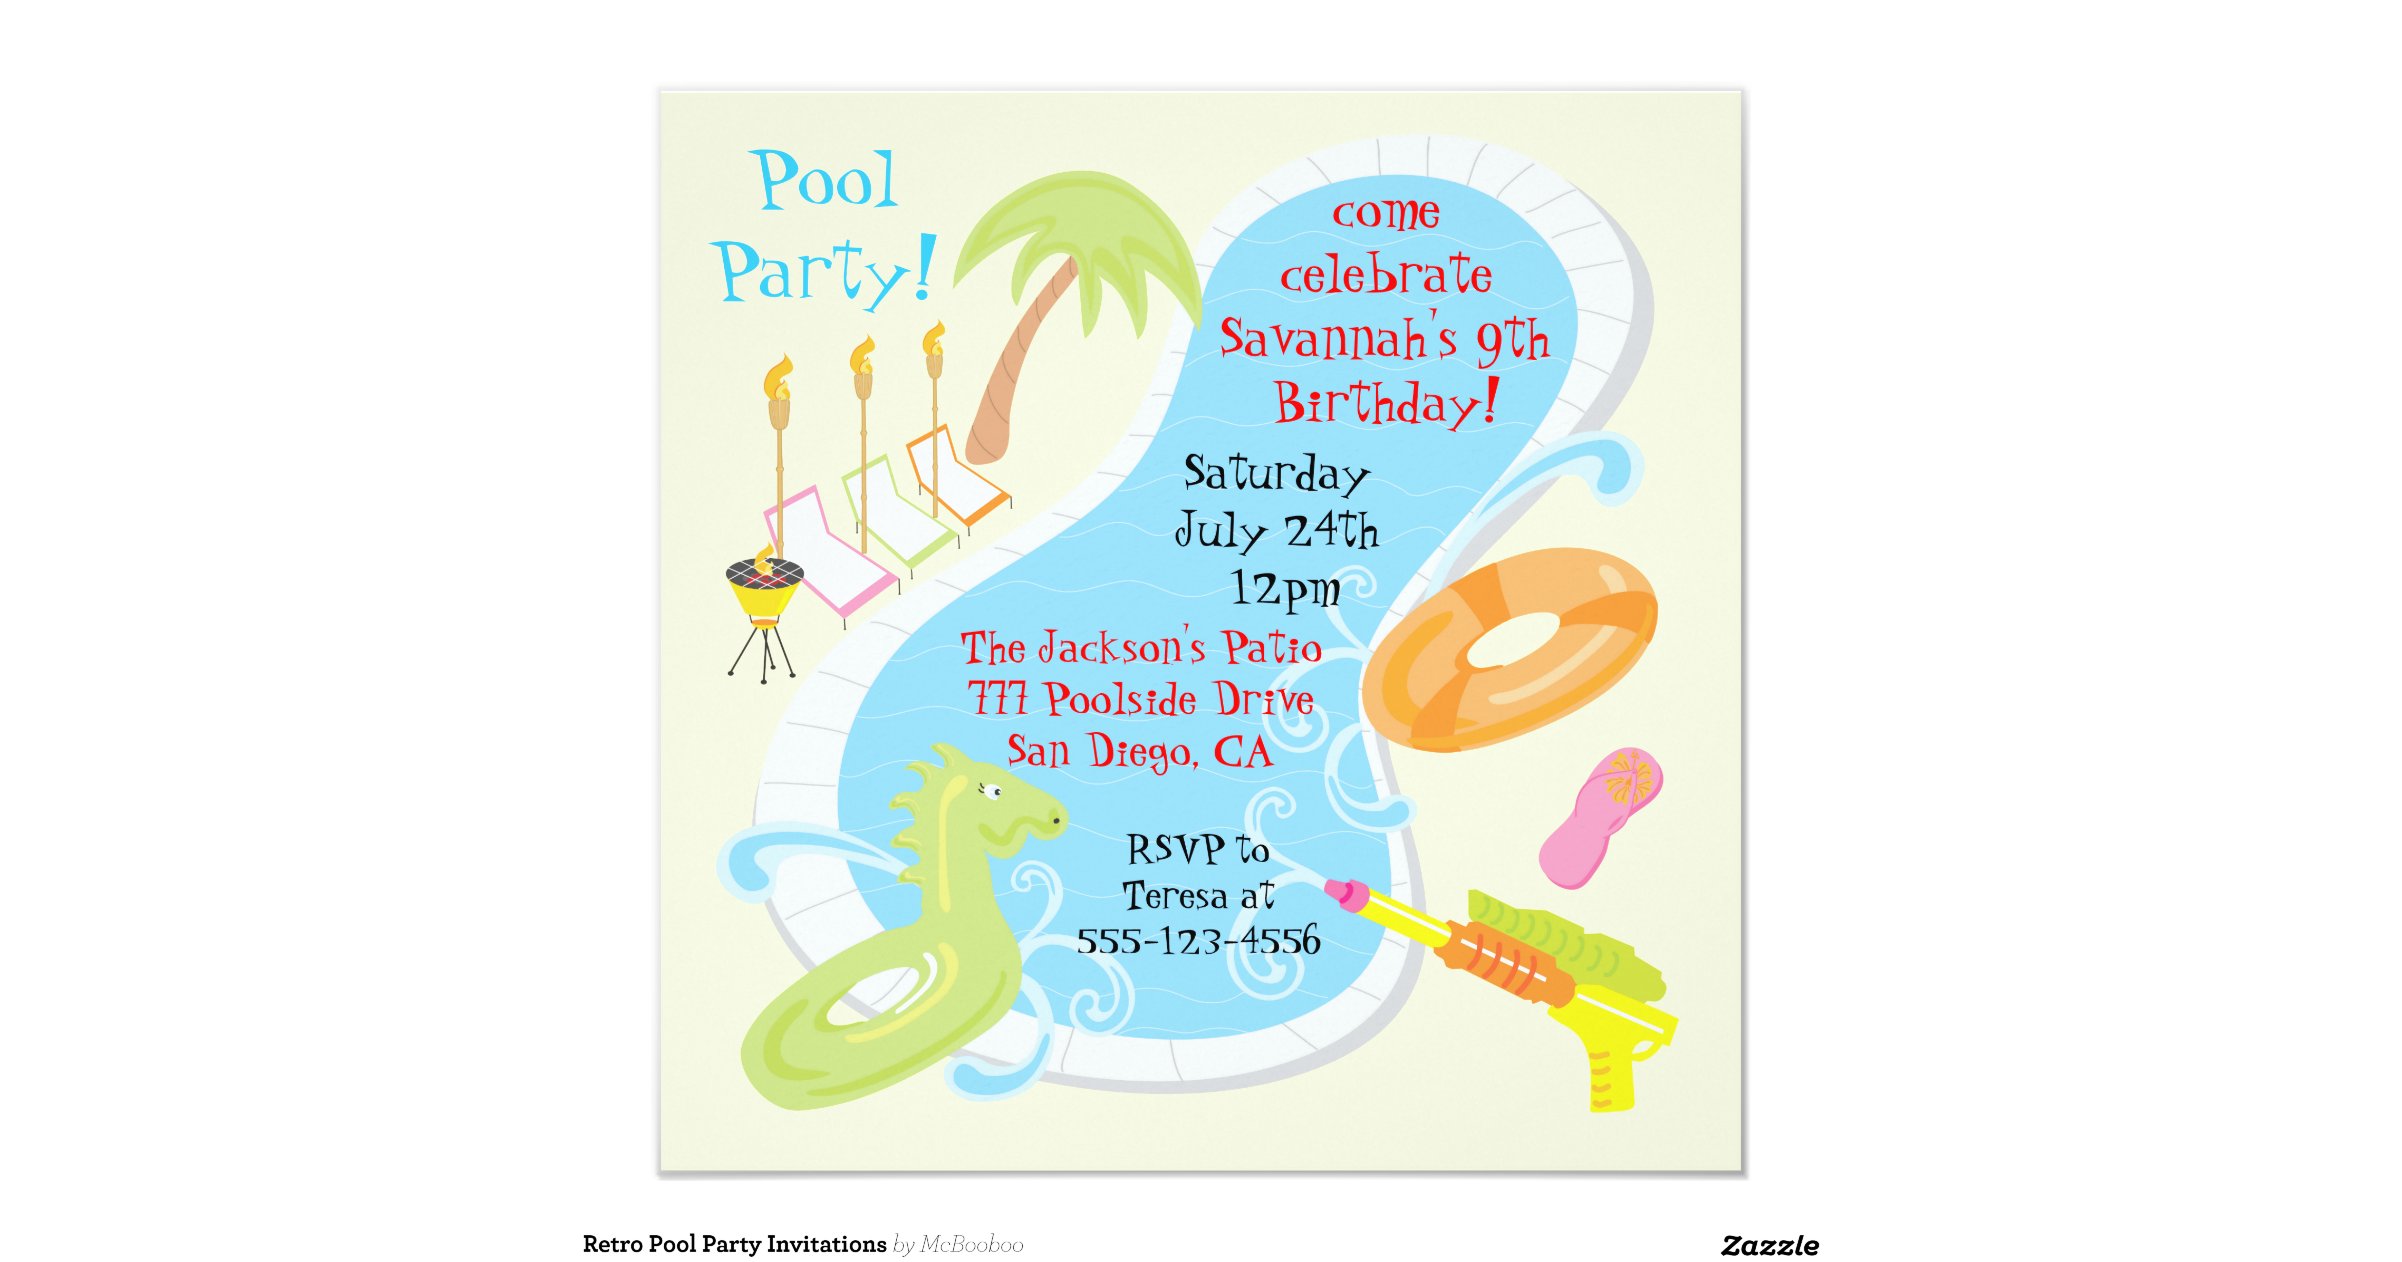 Retro Pool Party Invitations 6